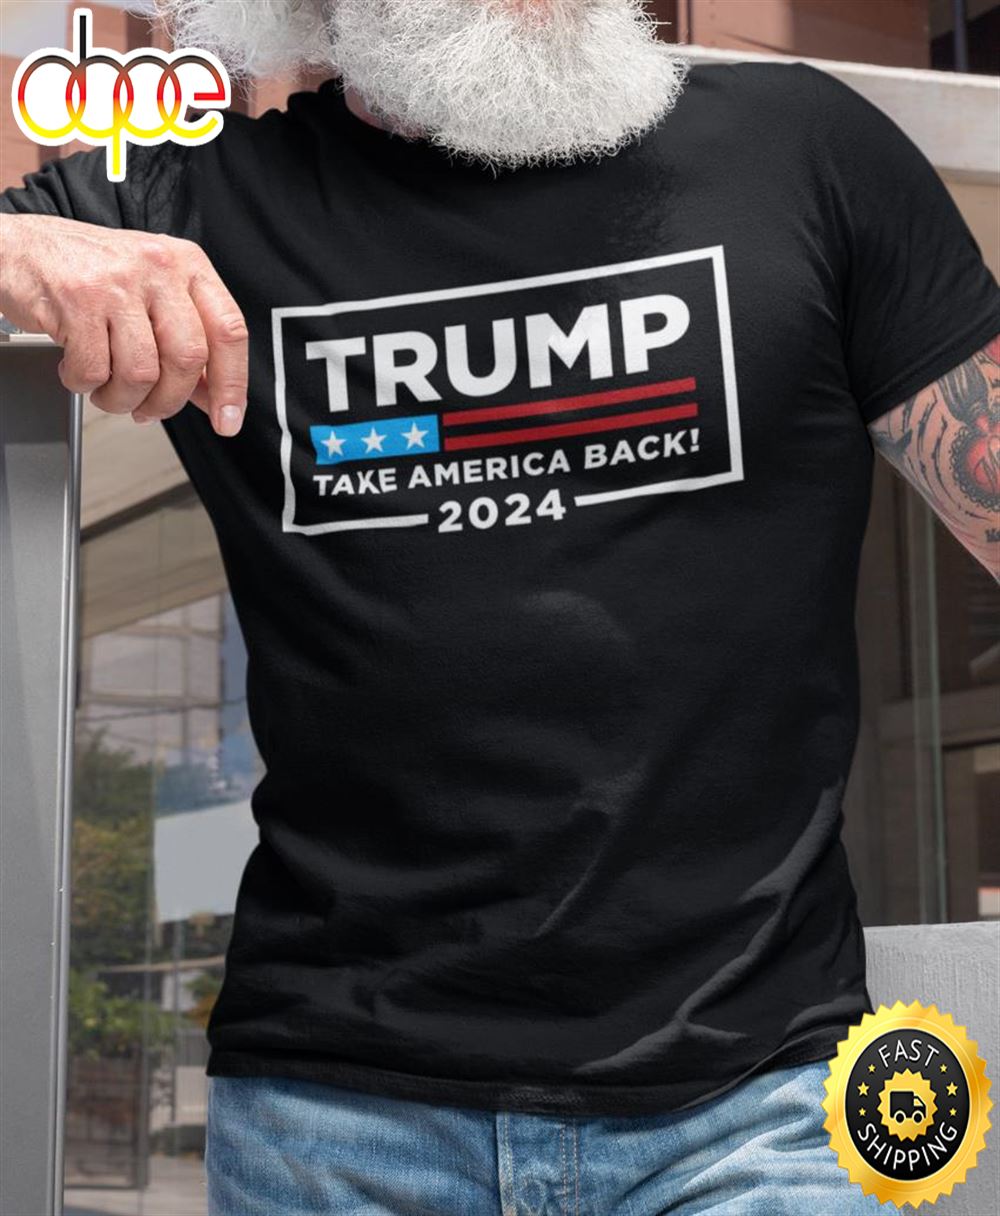 Donald Trump Shirts Take America Back Political Shirts Funny Trump 2024 Shirt S2oekb